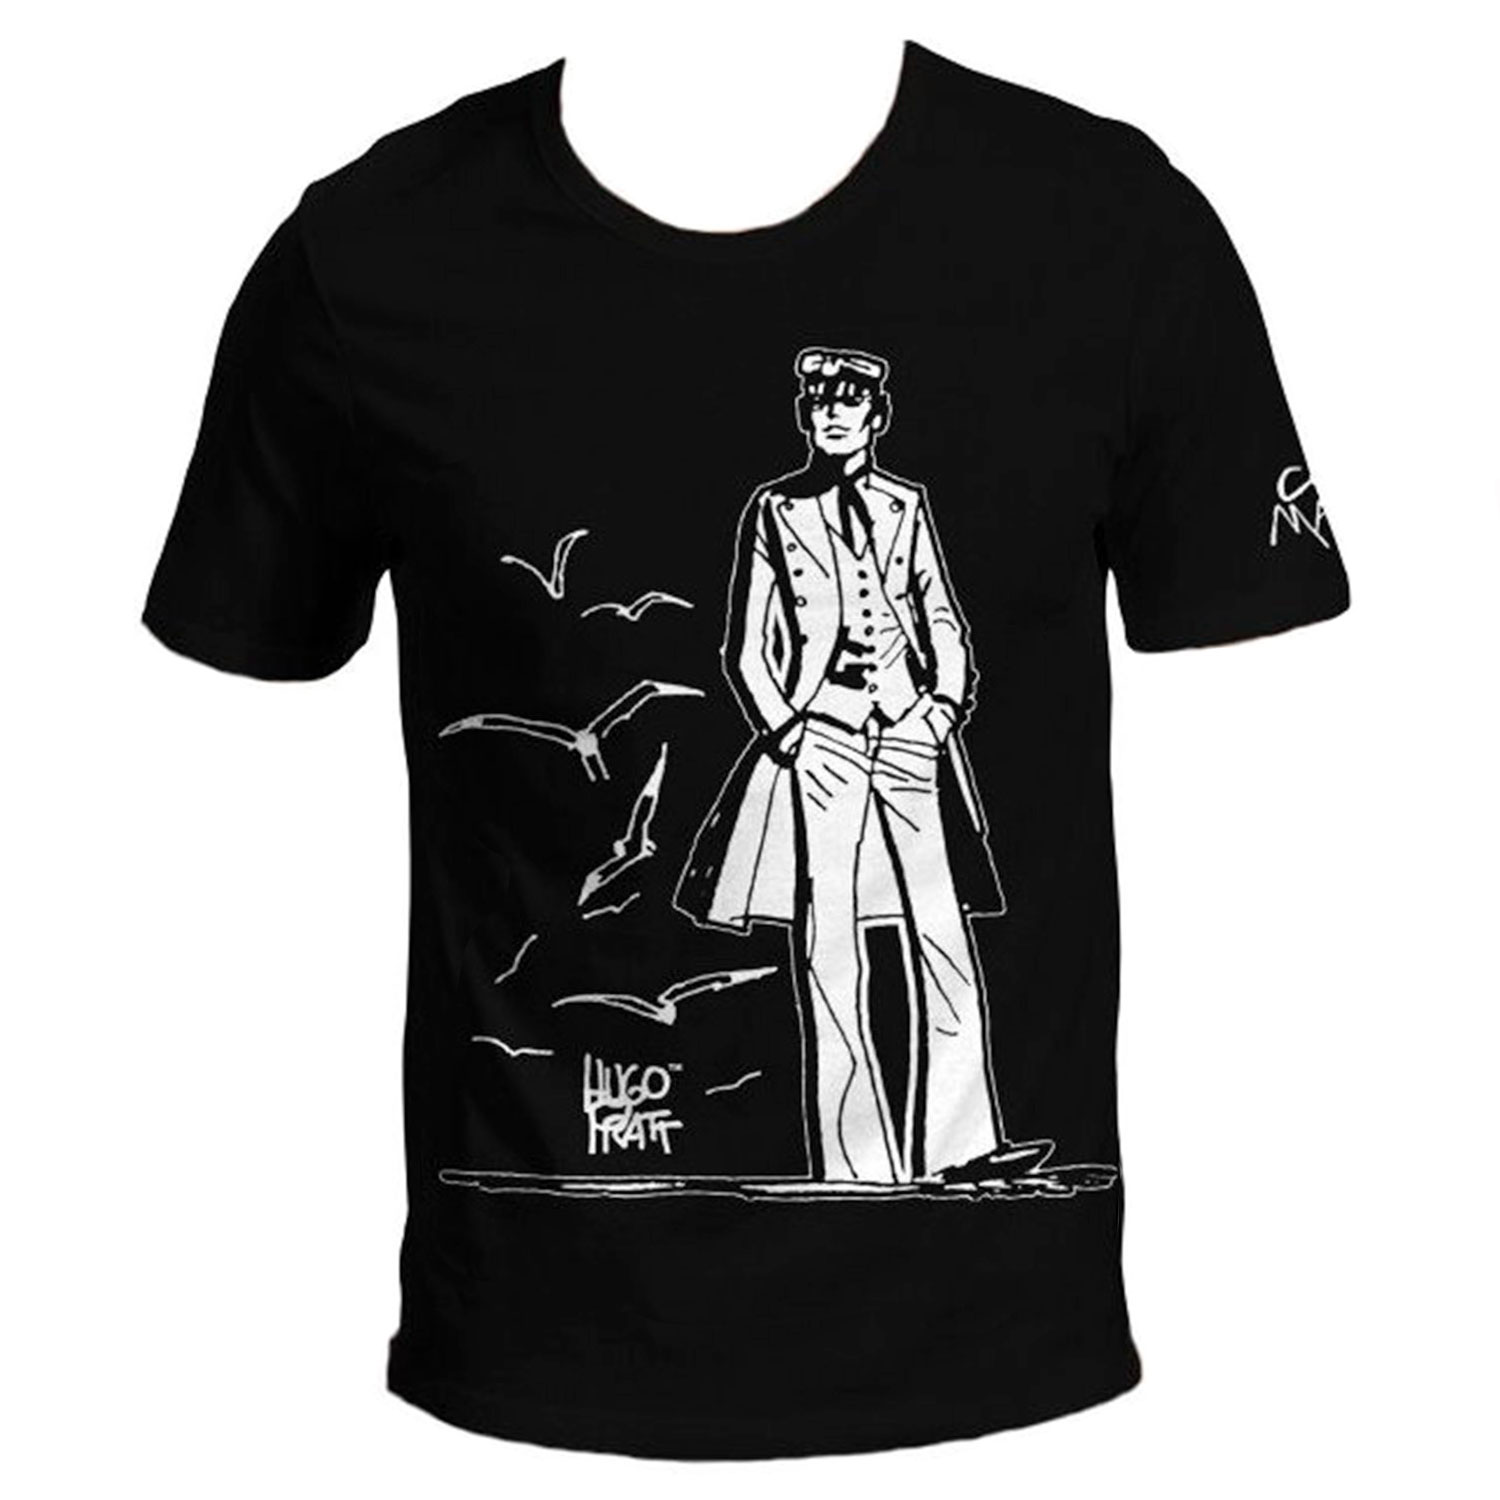 T-shirt Hugo Pratt : Corto Maltés, 40 años ! - Negro - Tamaño L